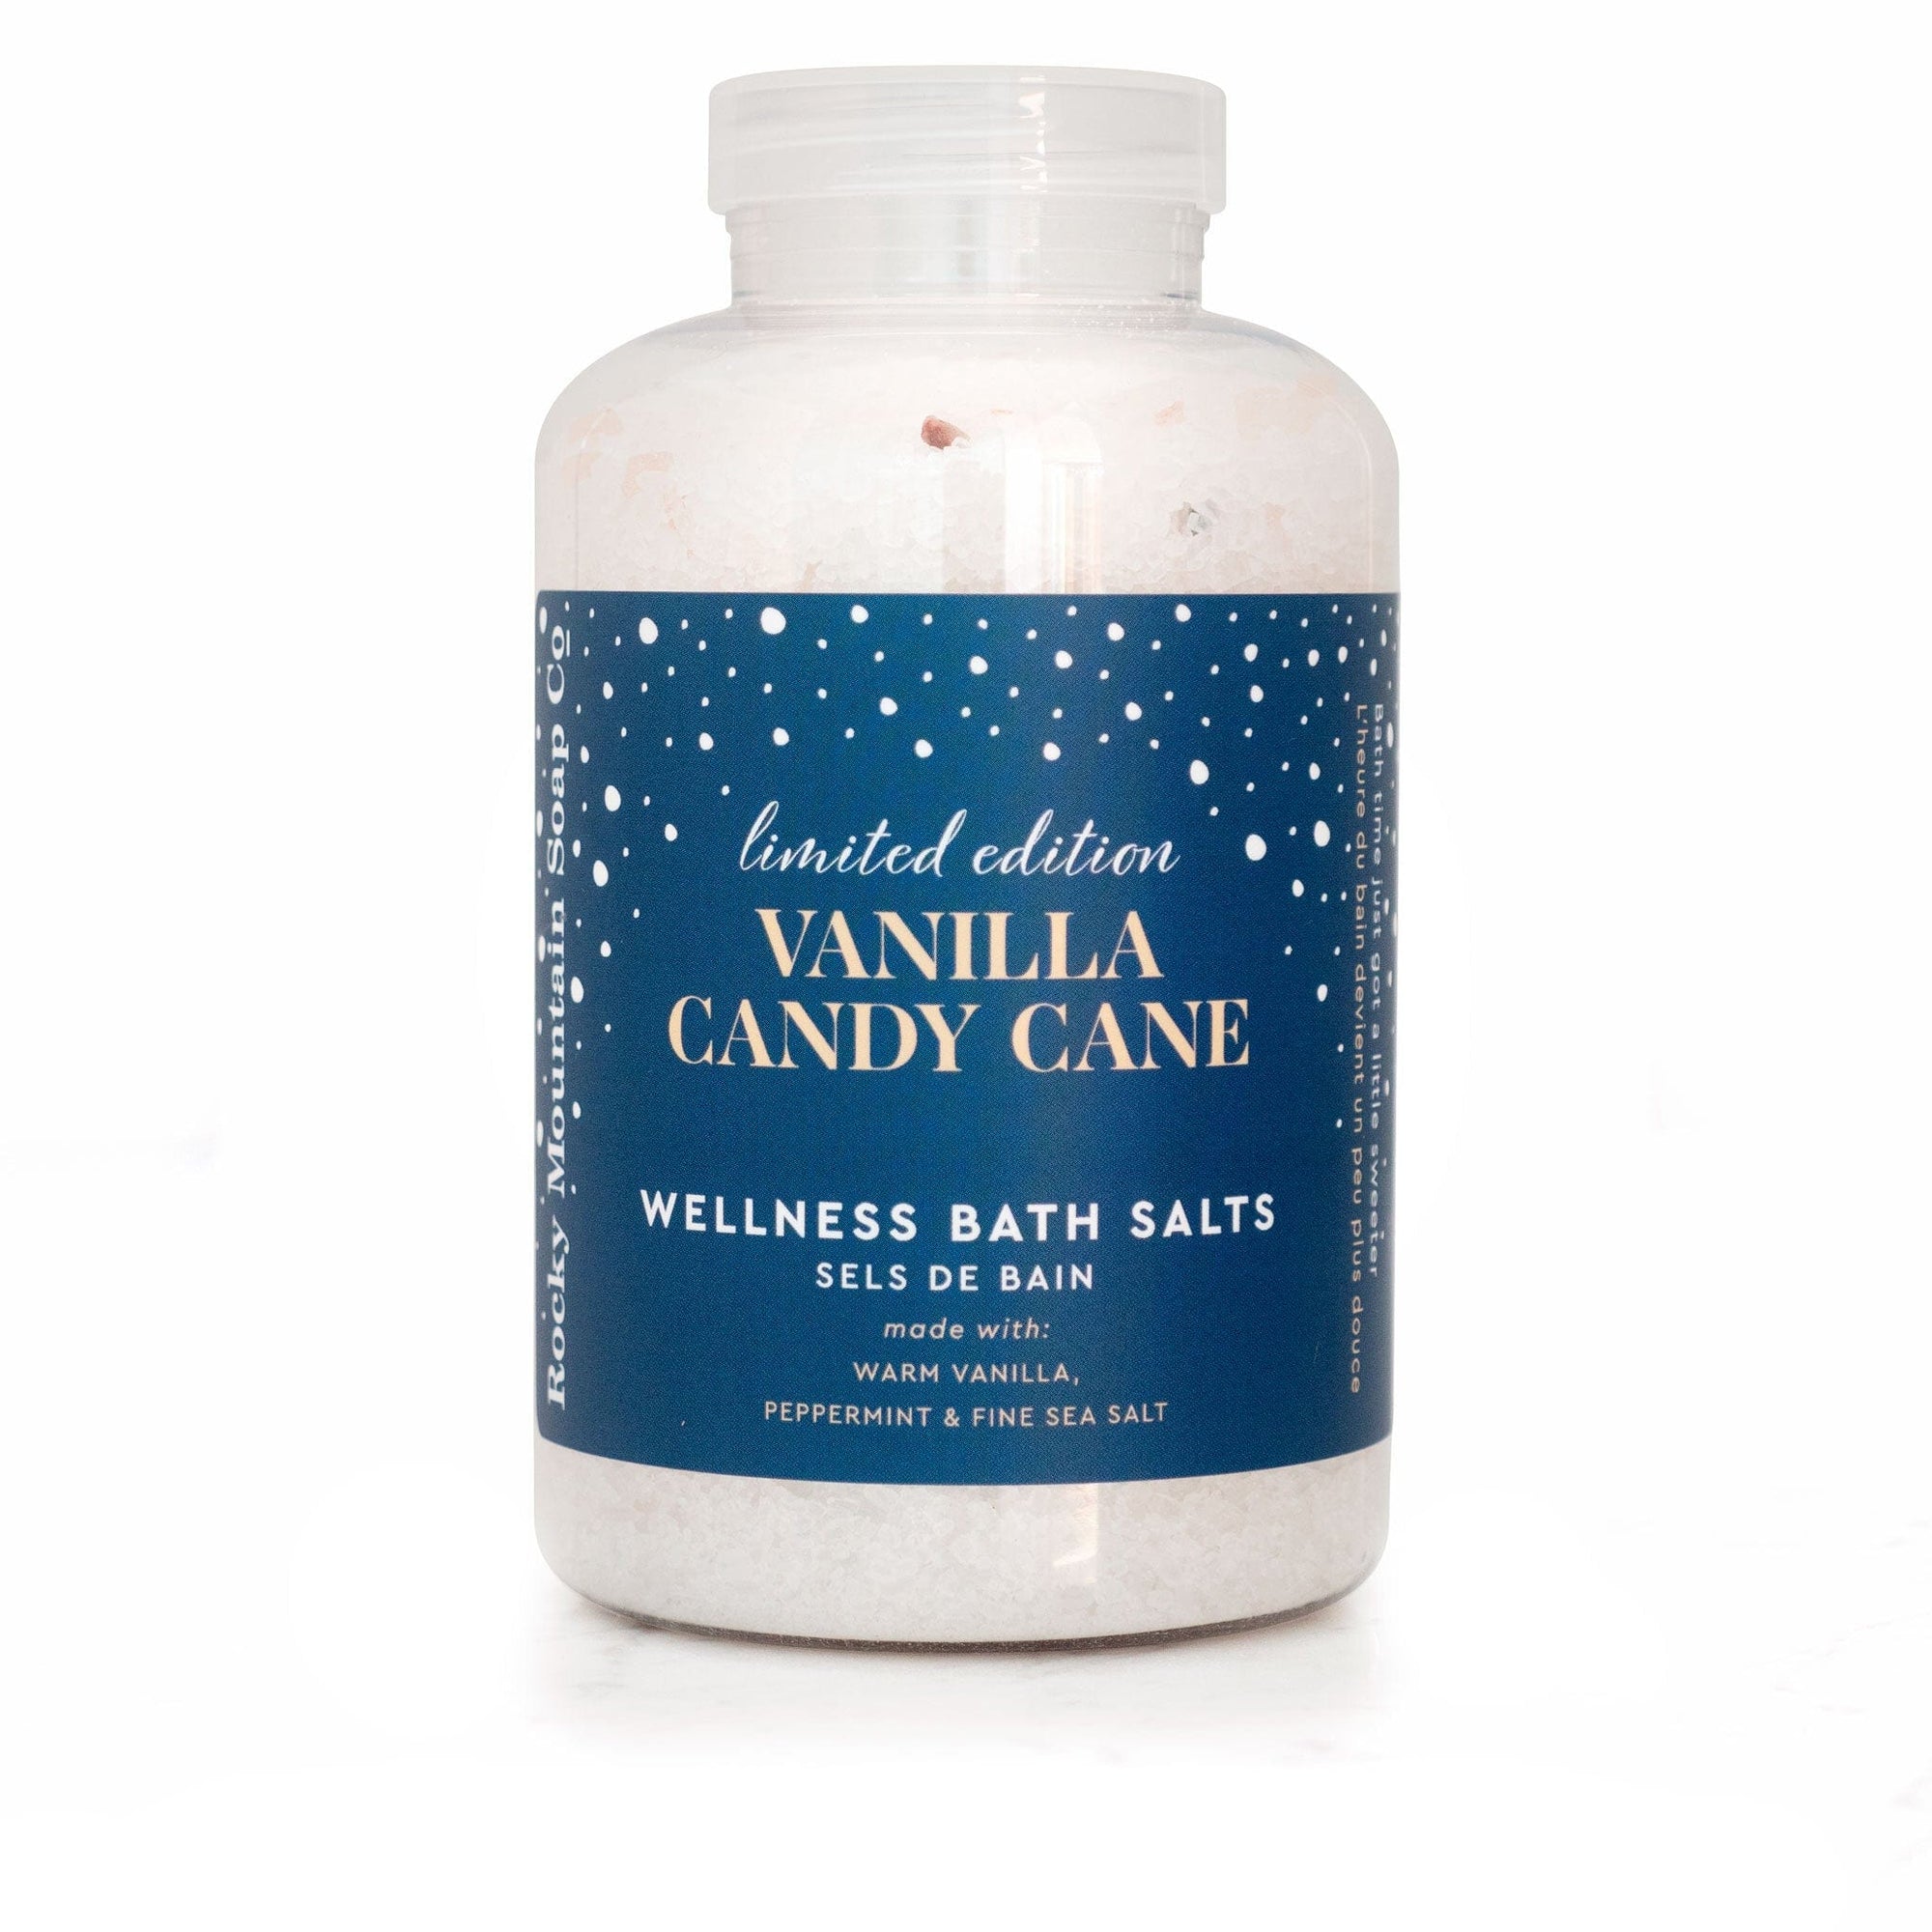 Vanilla Candy Cane Wellness Bath Salts